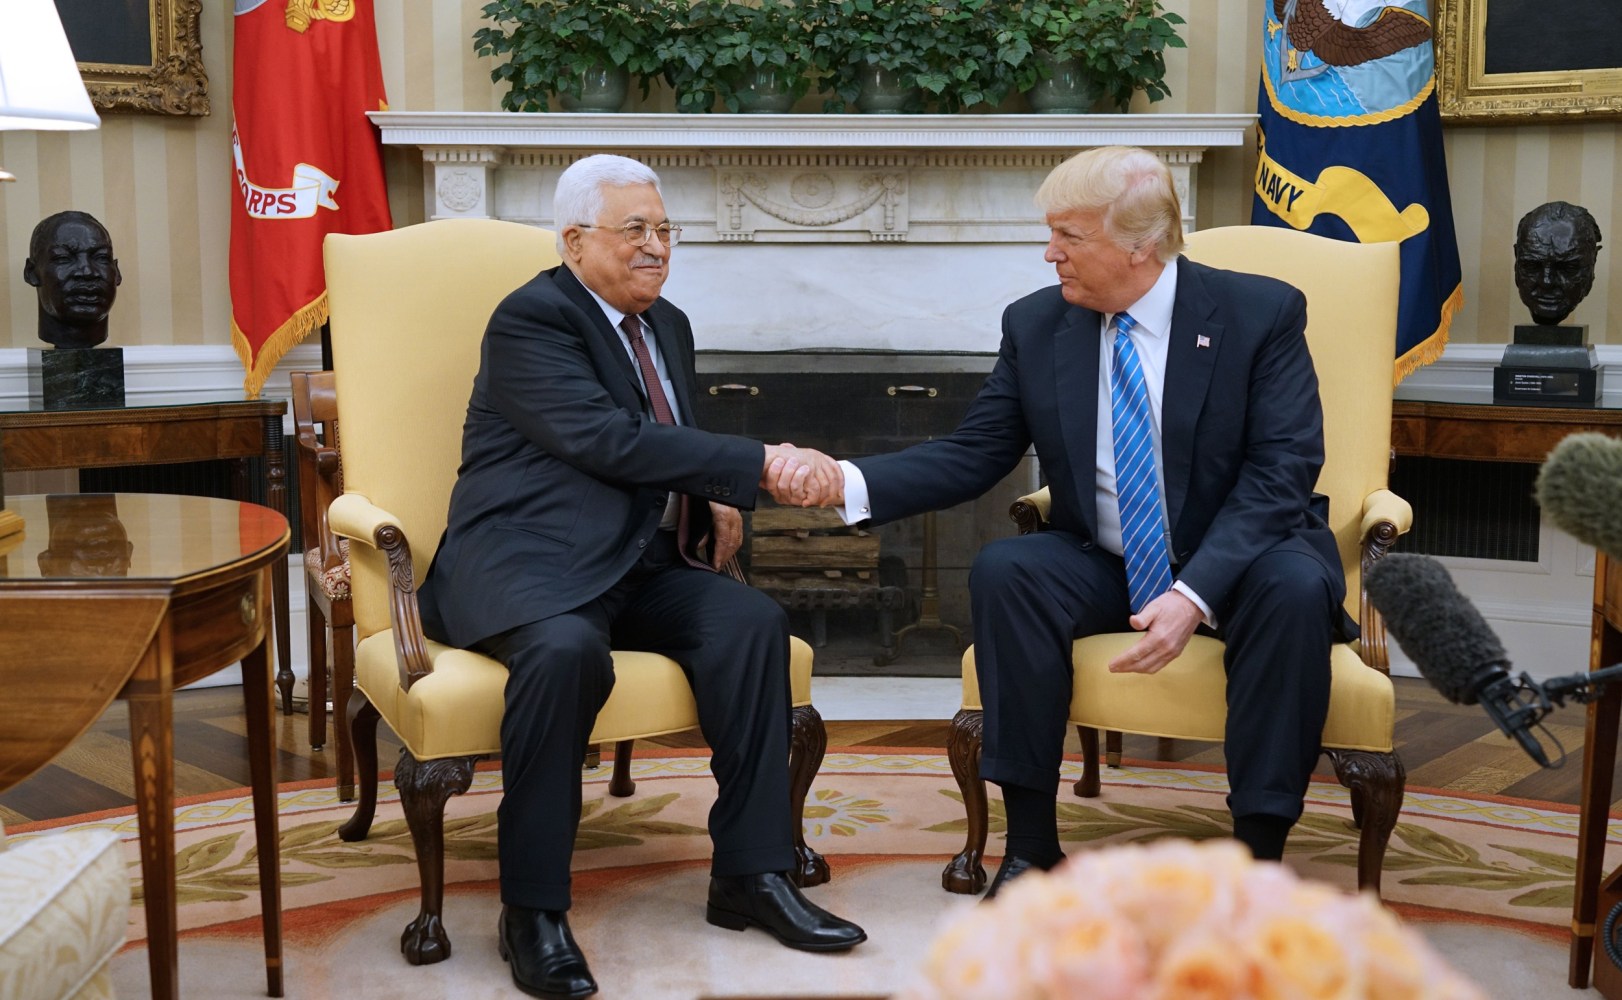 Trump and Abbas